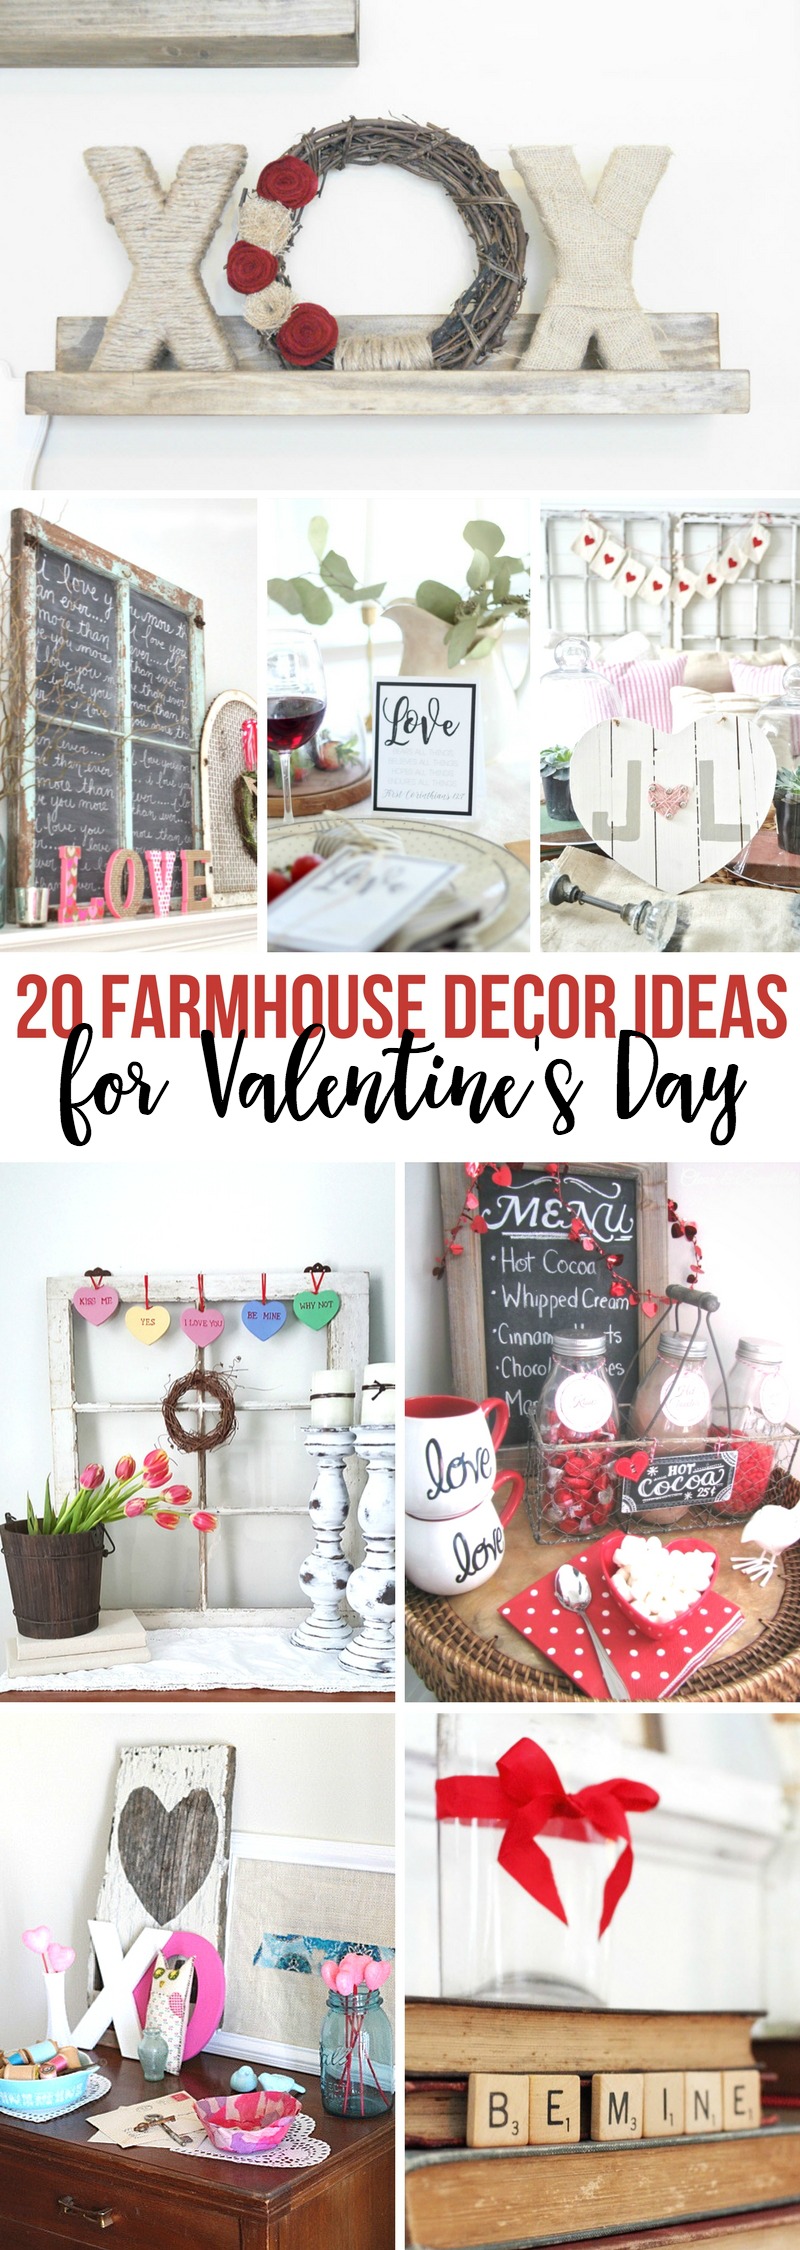 Farmhouse Decor Ideas for Valentine's Day